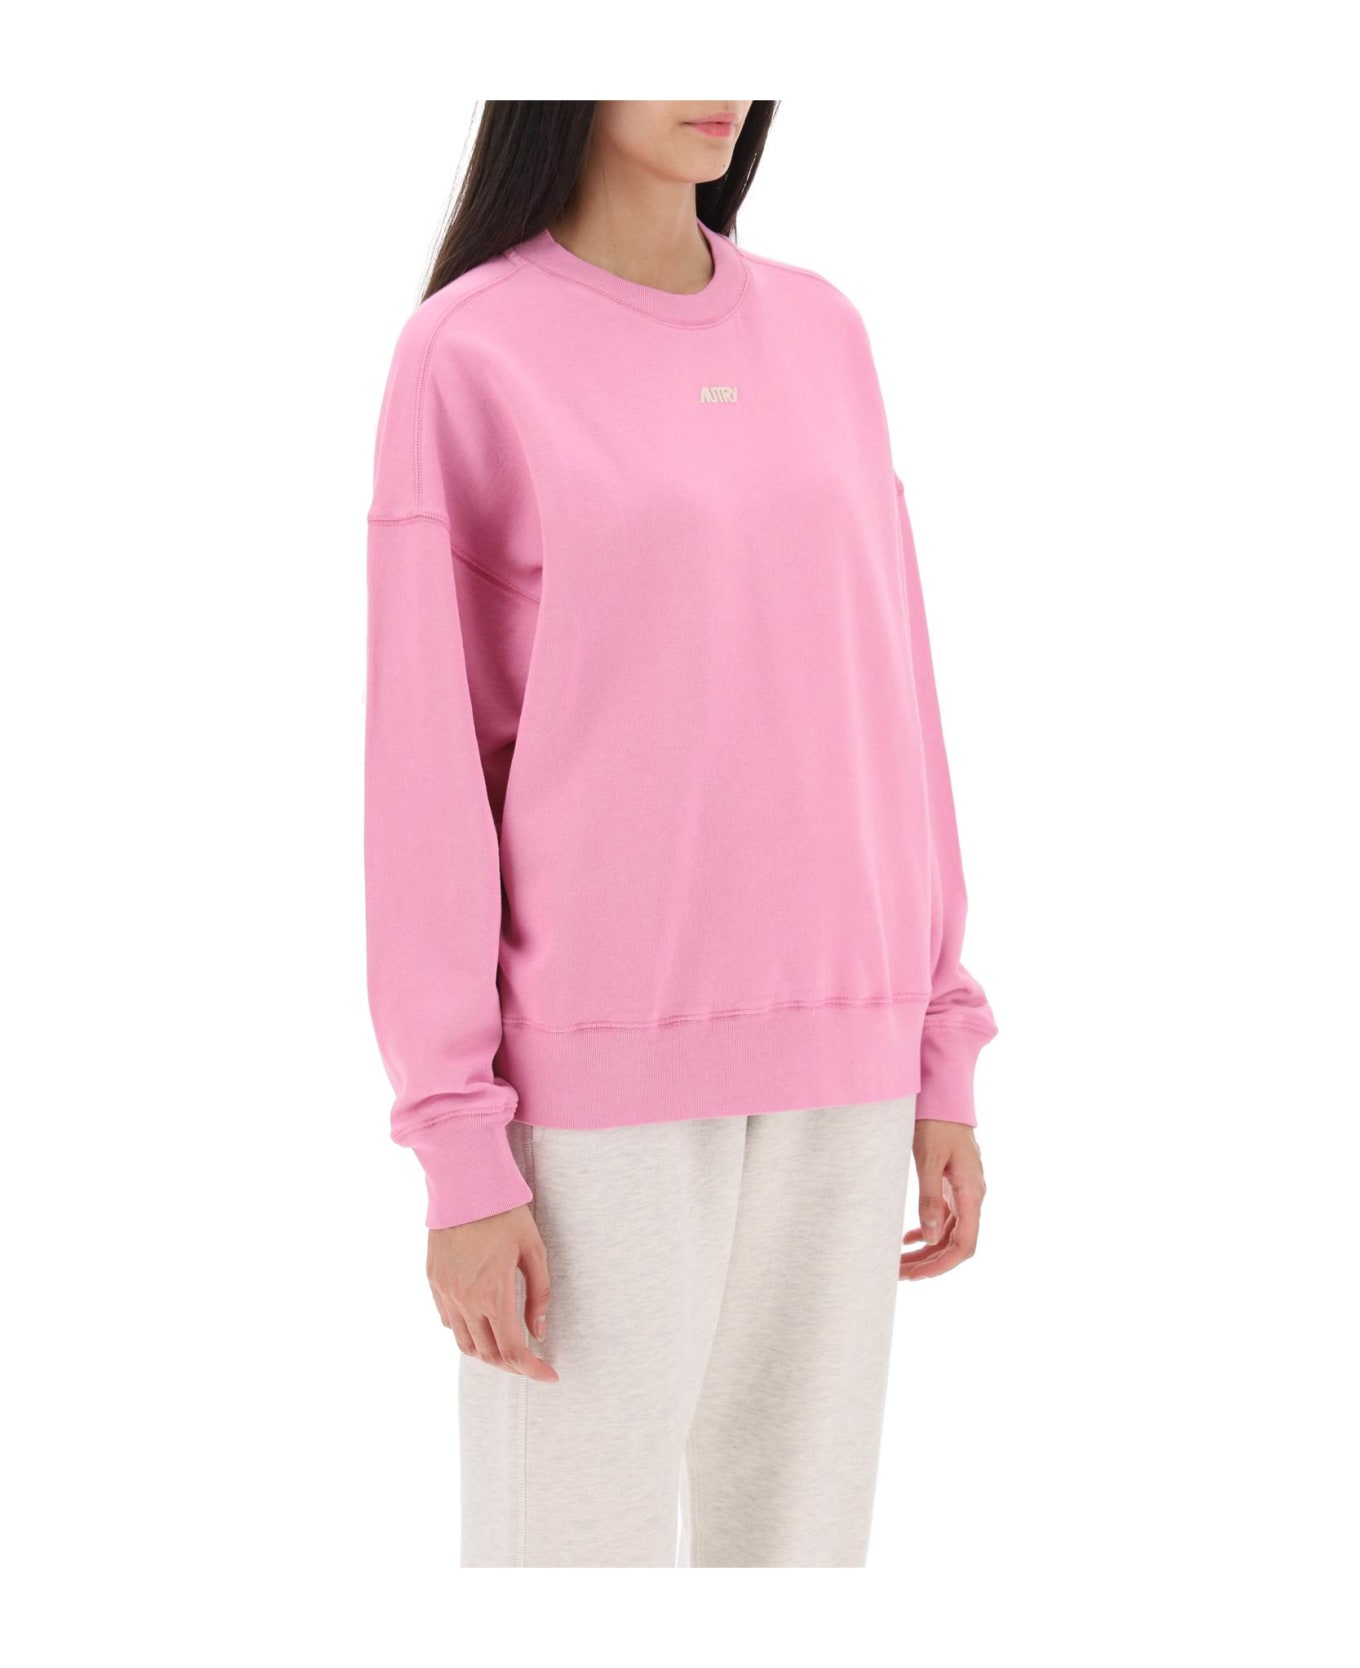 Autry Crewneck Sweatshirt With Logo - Pink